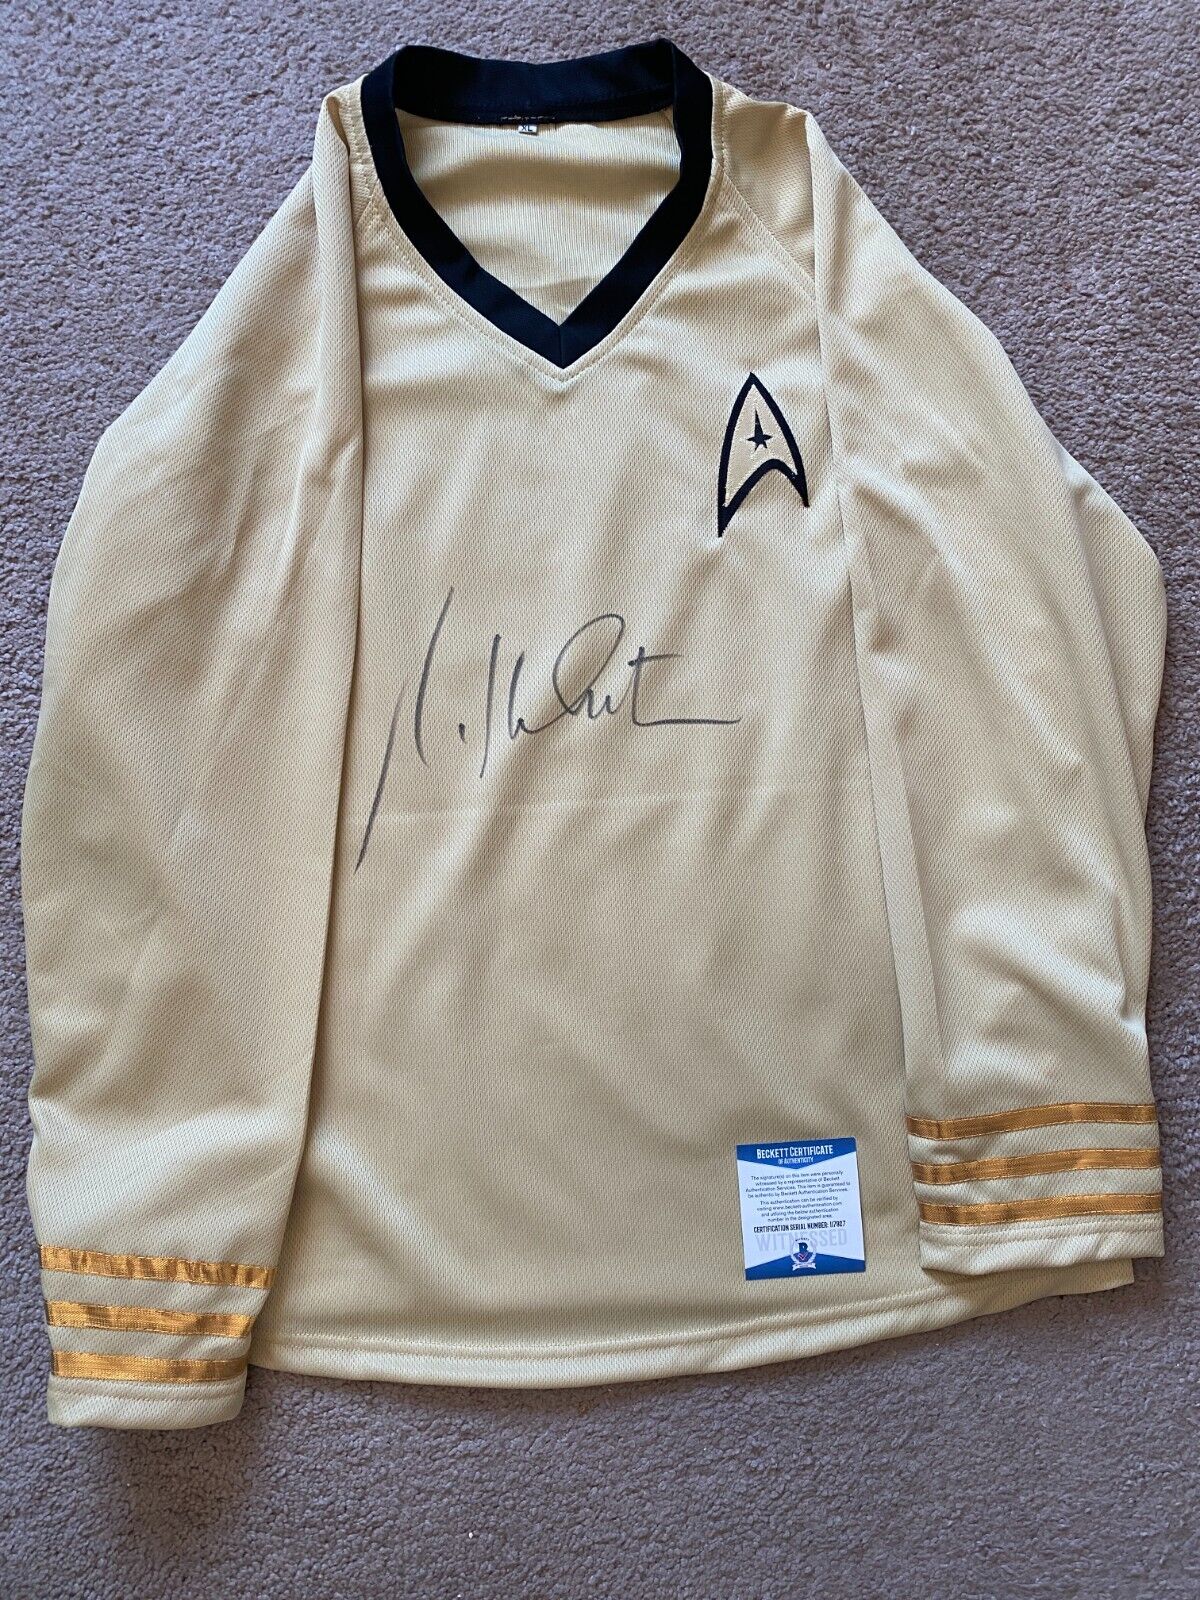 William Shatner signed Star Trek Uniform. Beckett Authenticated.